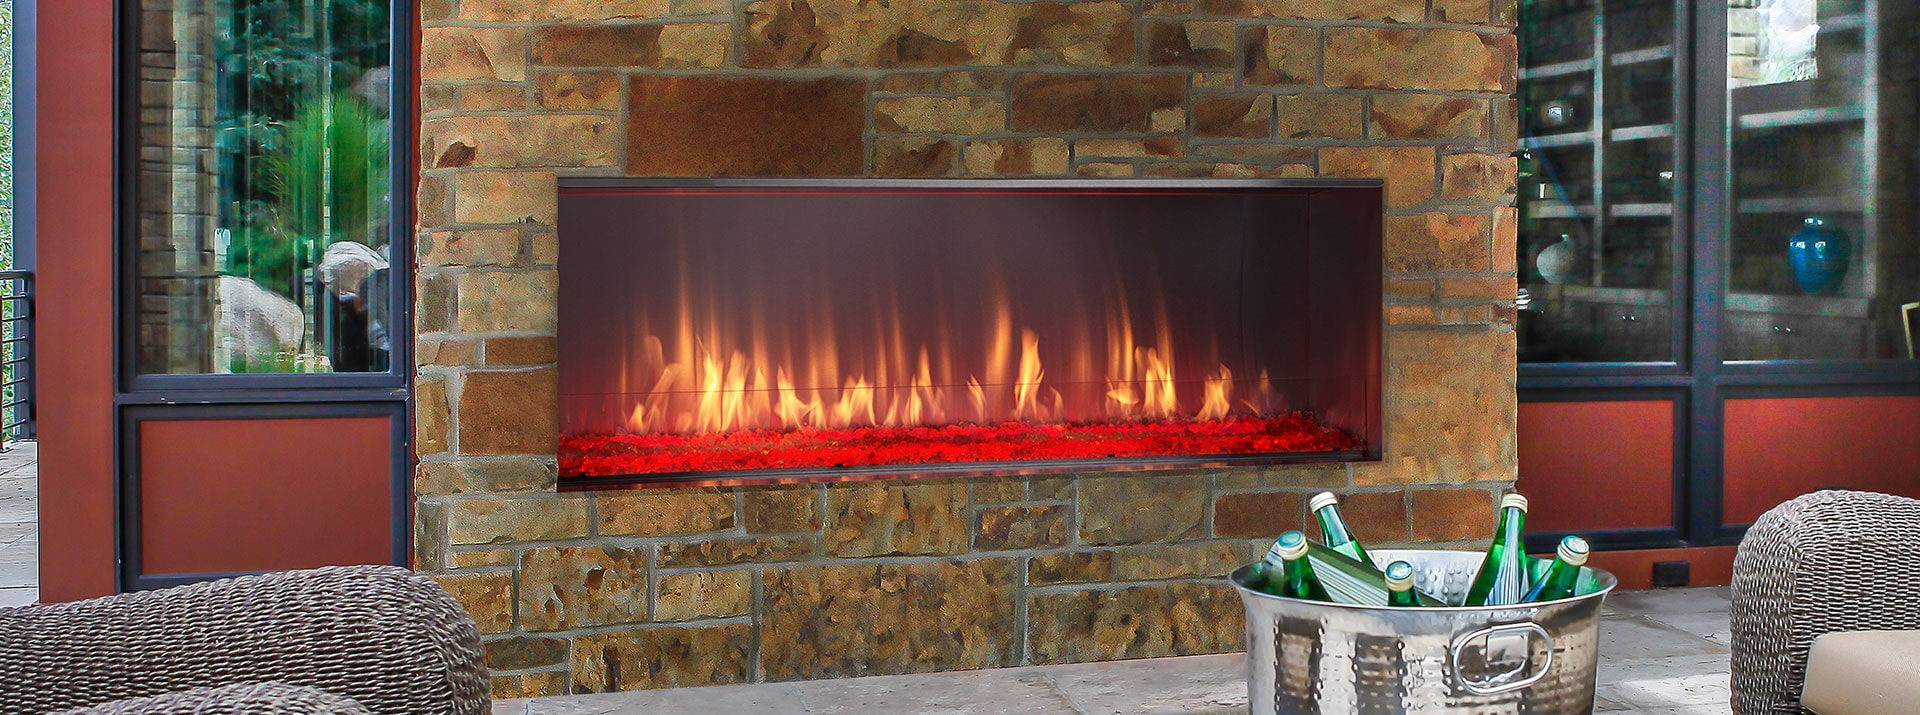 Contemporary Gas Fireplace Insert Luxury Lanai Gas Outdoor Fireplace